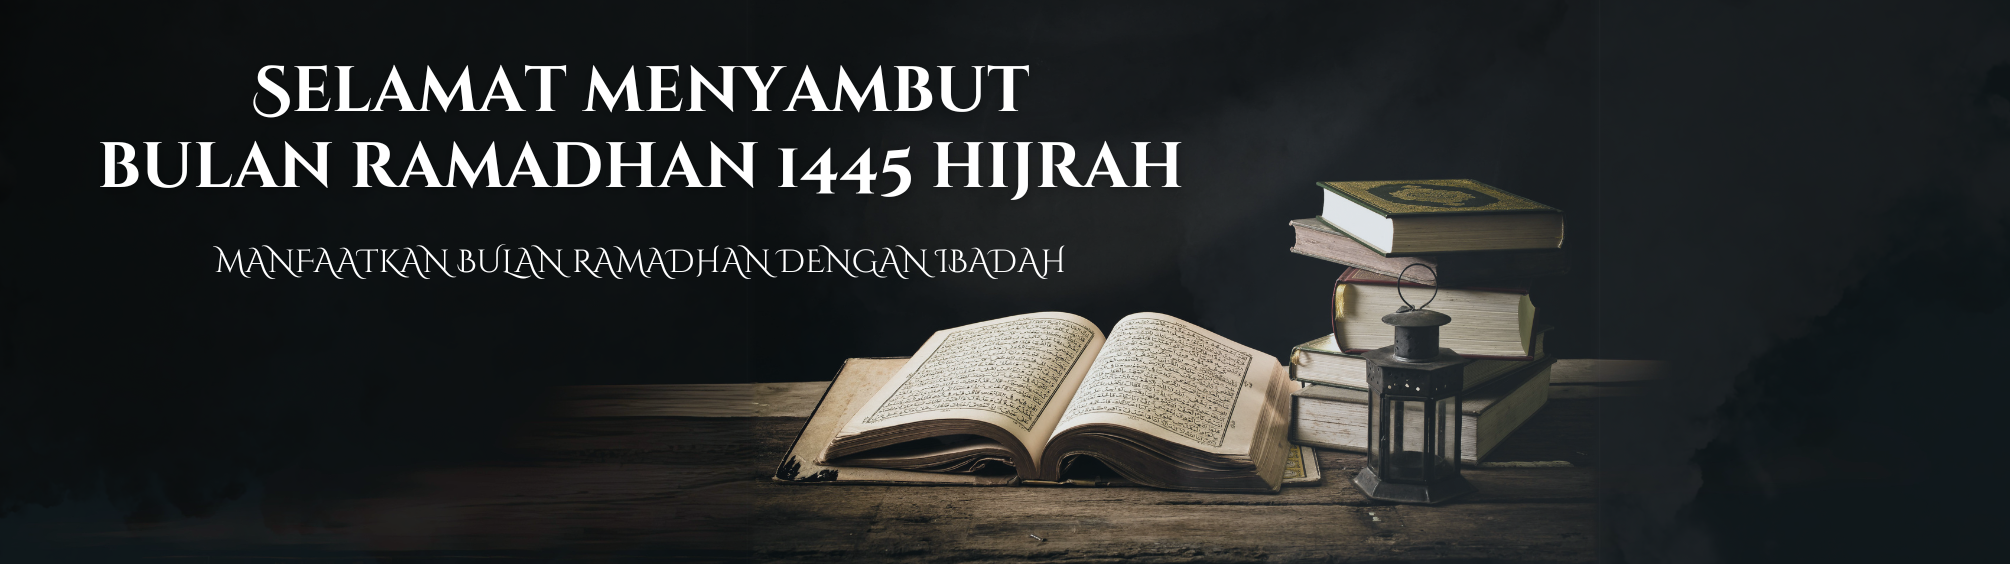 /Slider_images/Ramadhan 1445 Hijrah.png